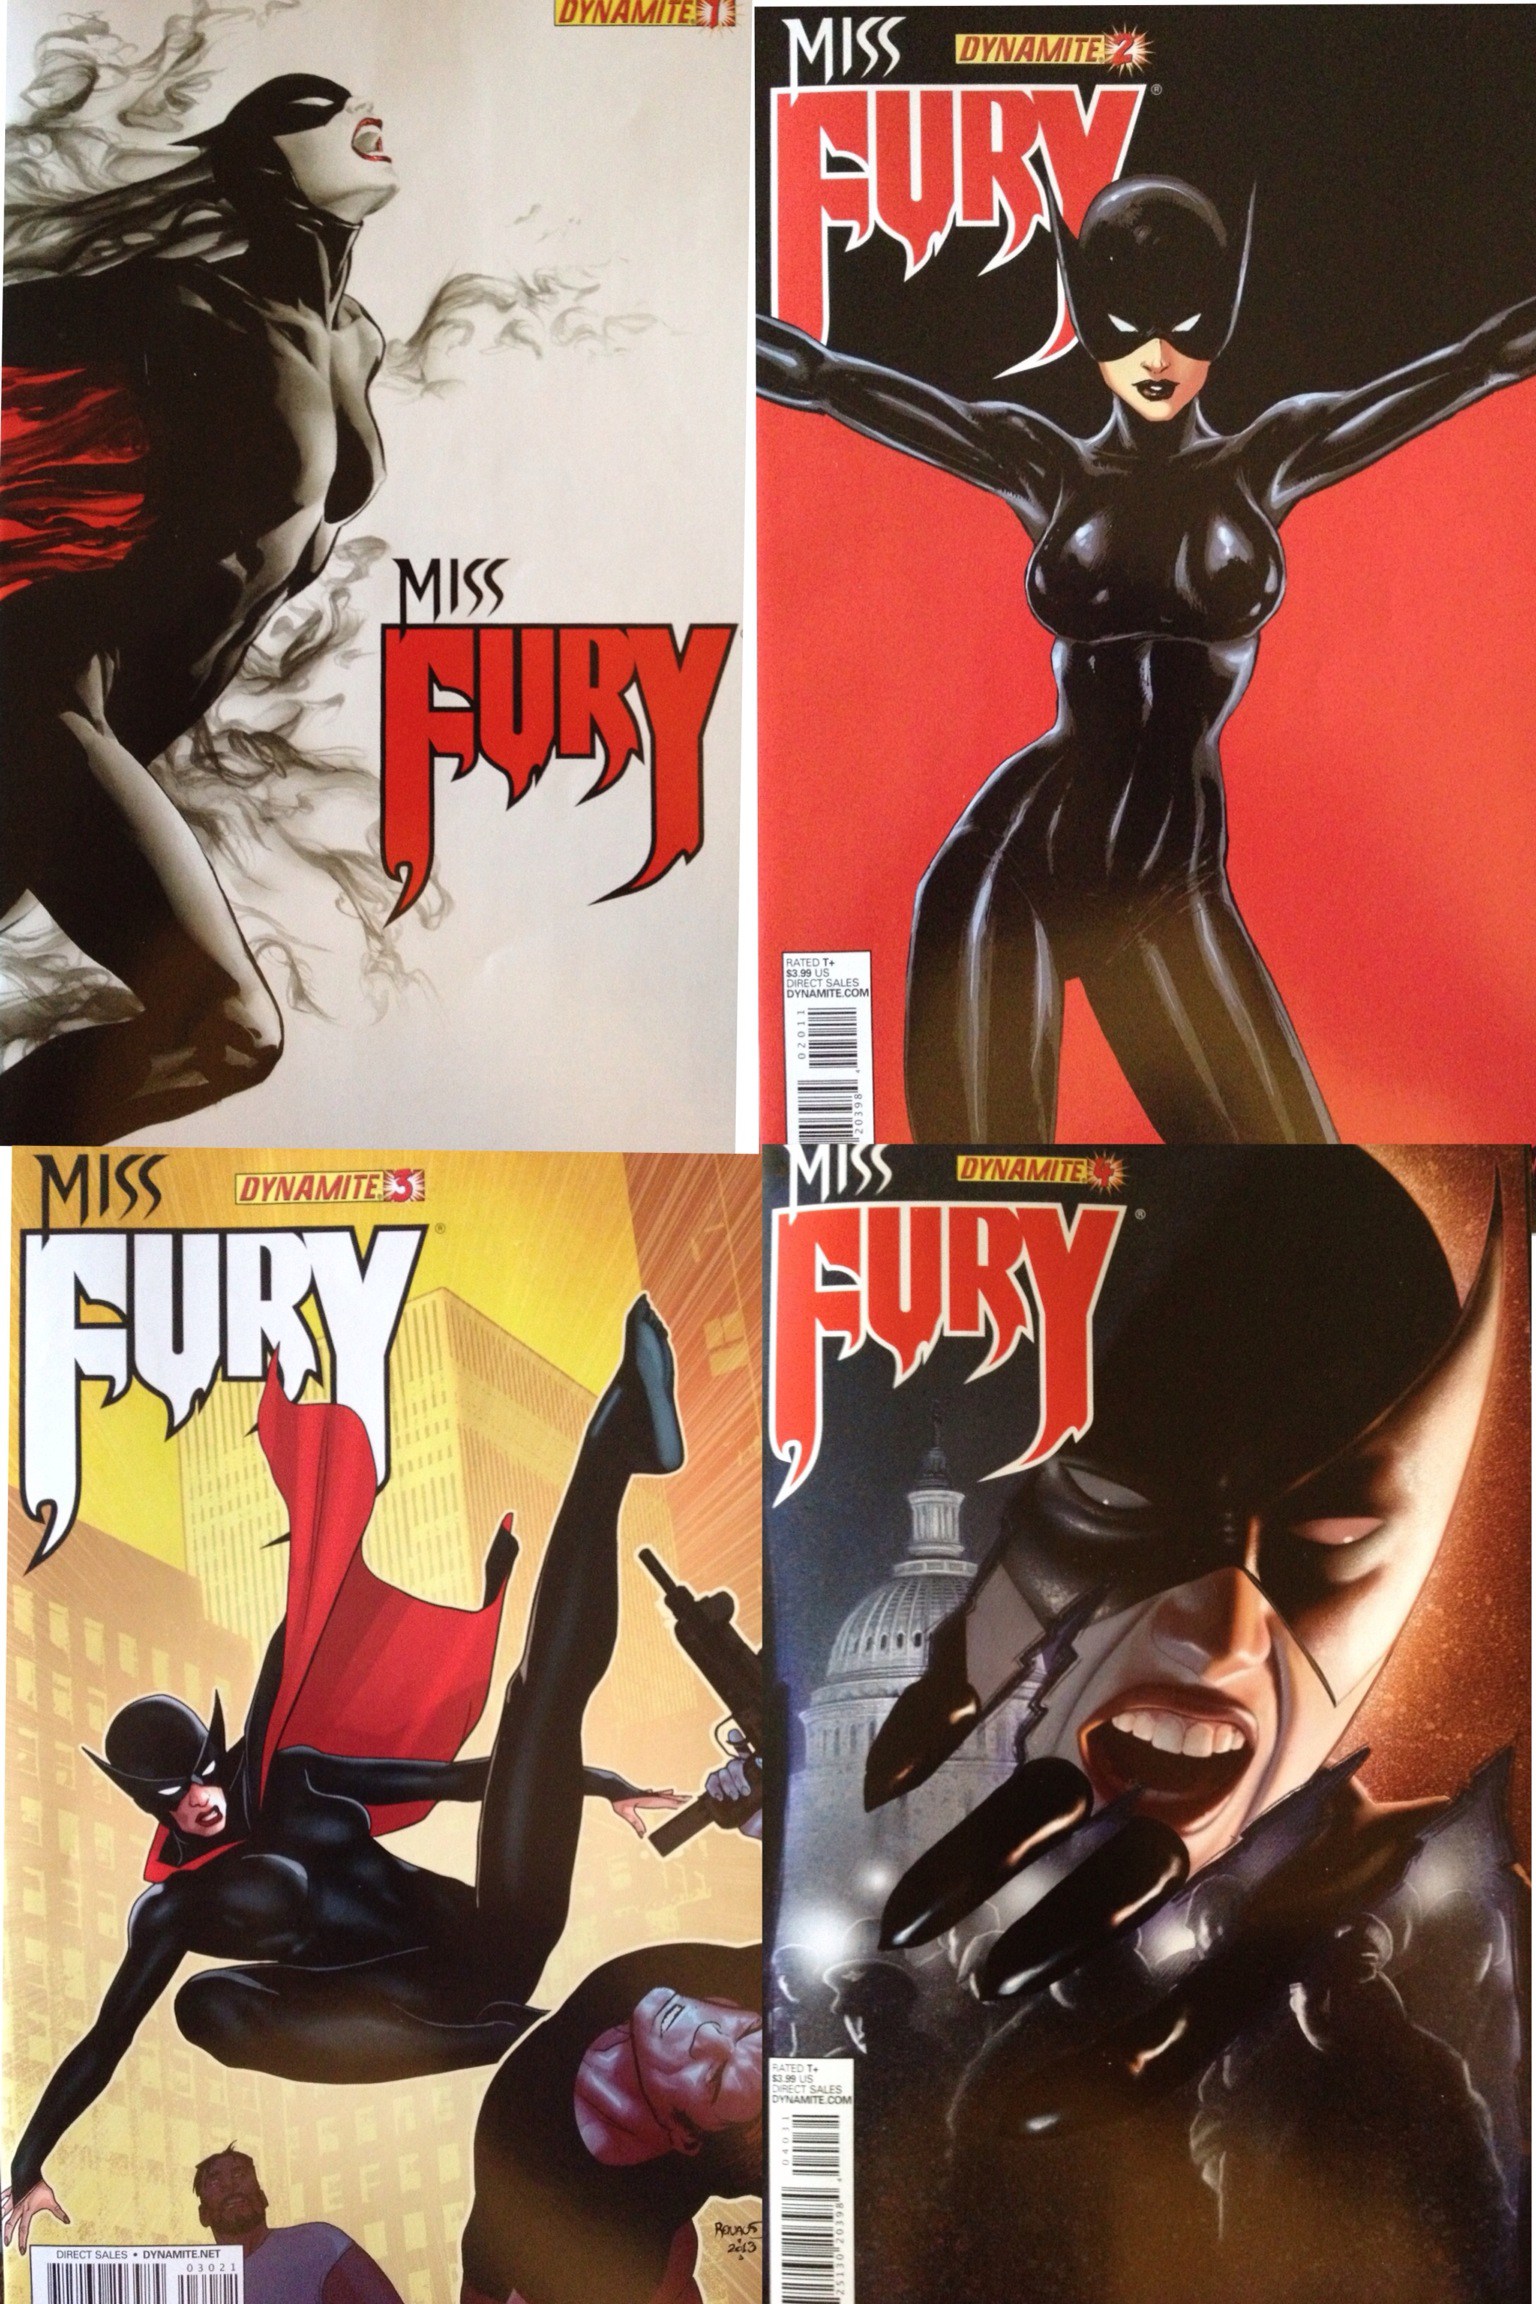 Miss Fury Pics, Comics Collection